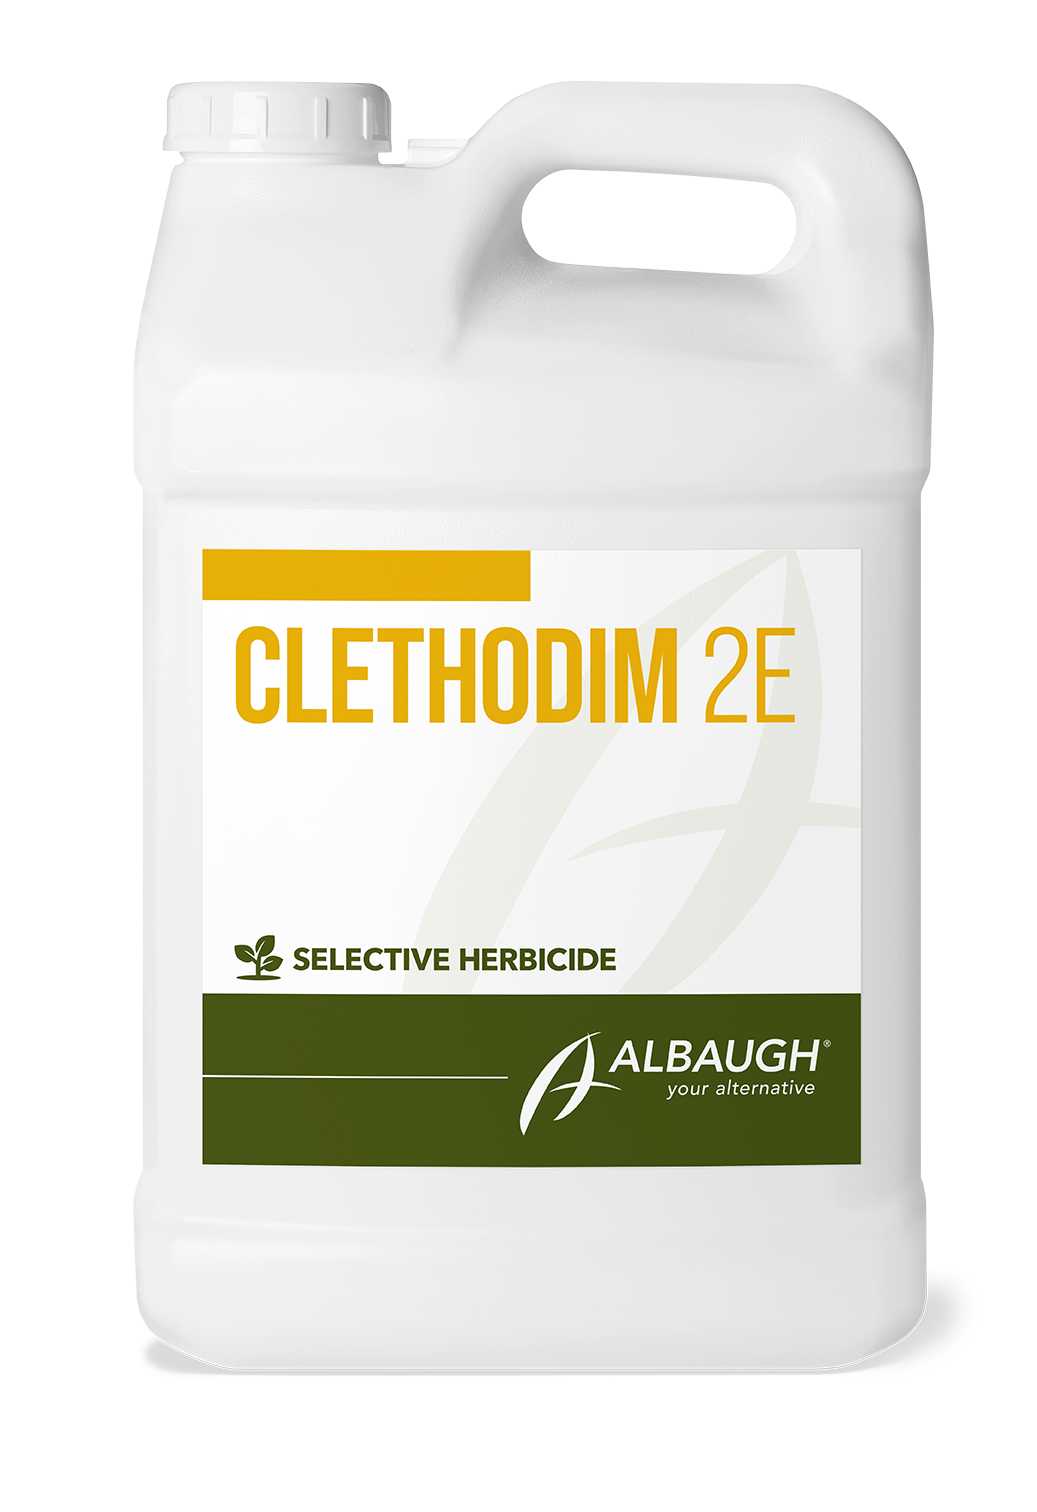 Clethodim 2E